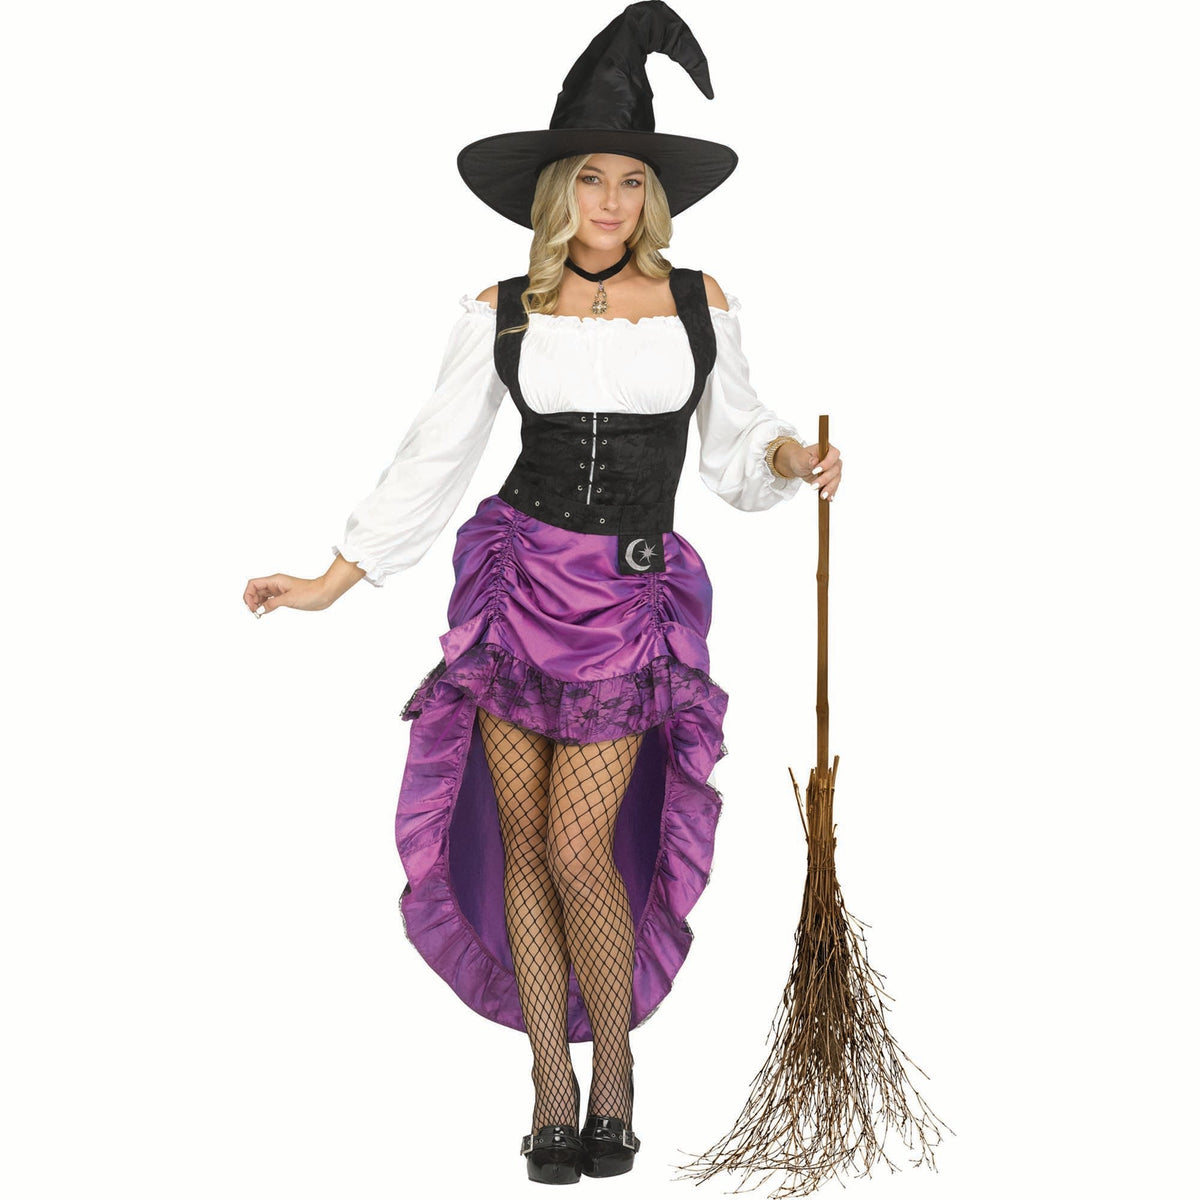 FUN WORLD Costumes Renaissance Witch Costume for Adults, White & Purple Corset Dress